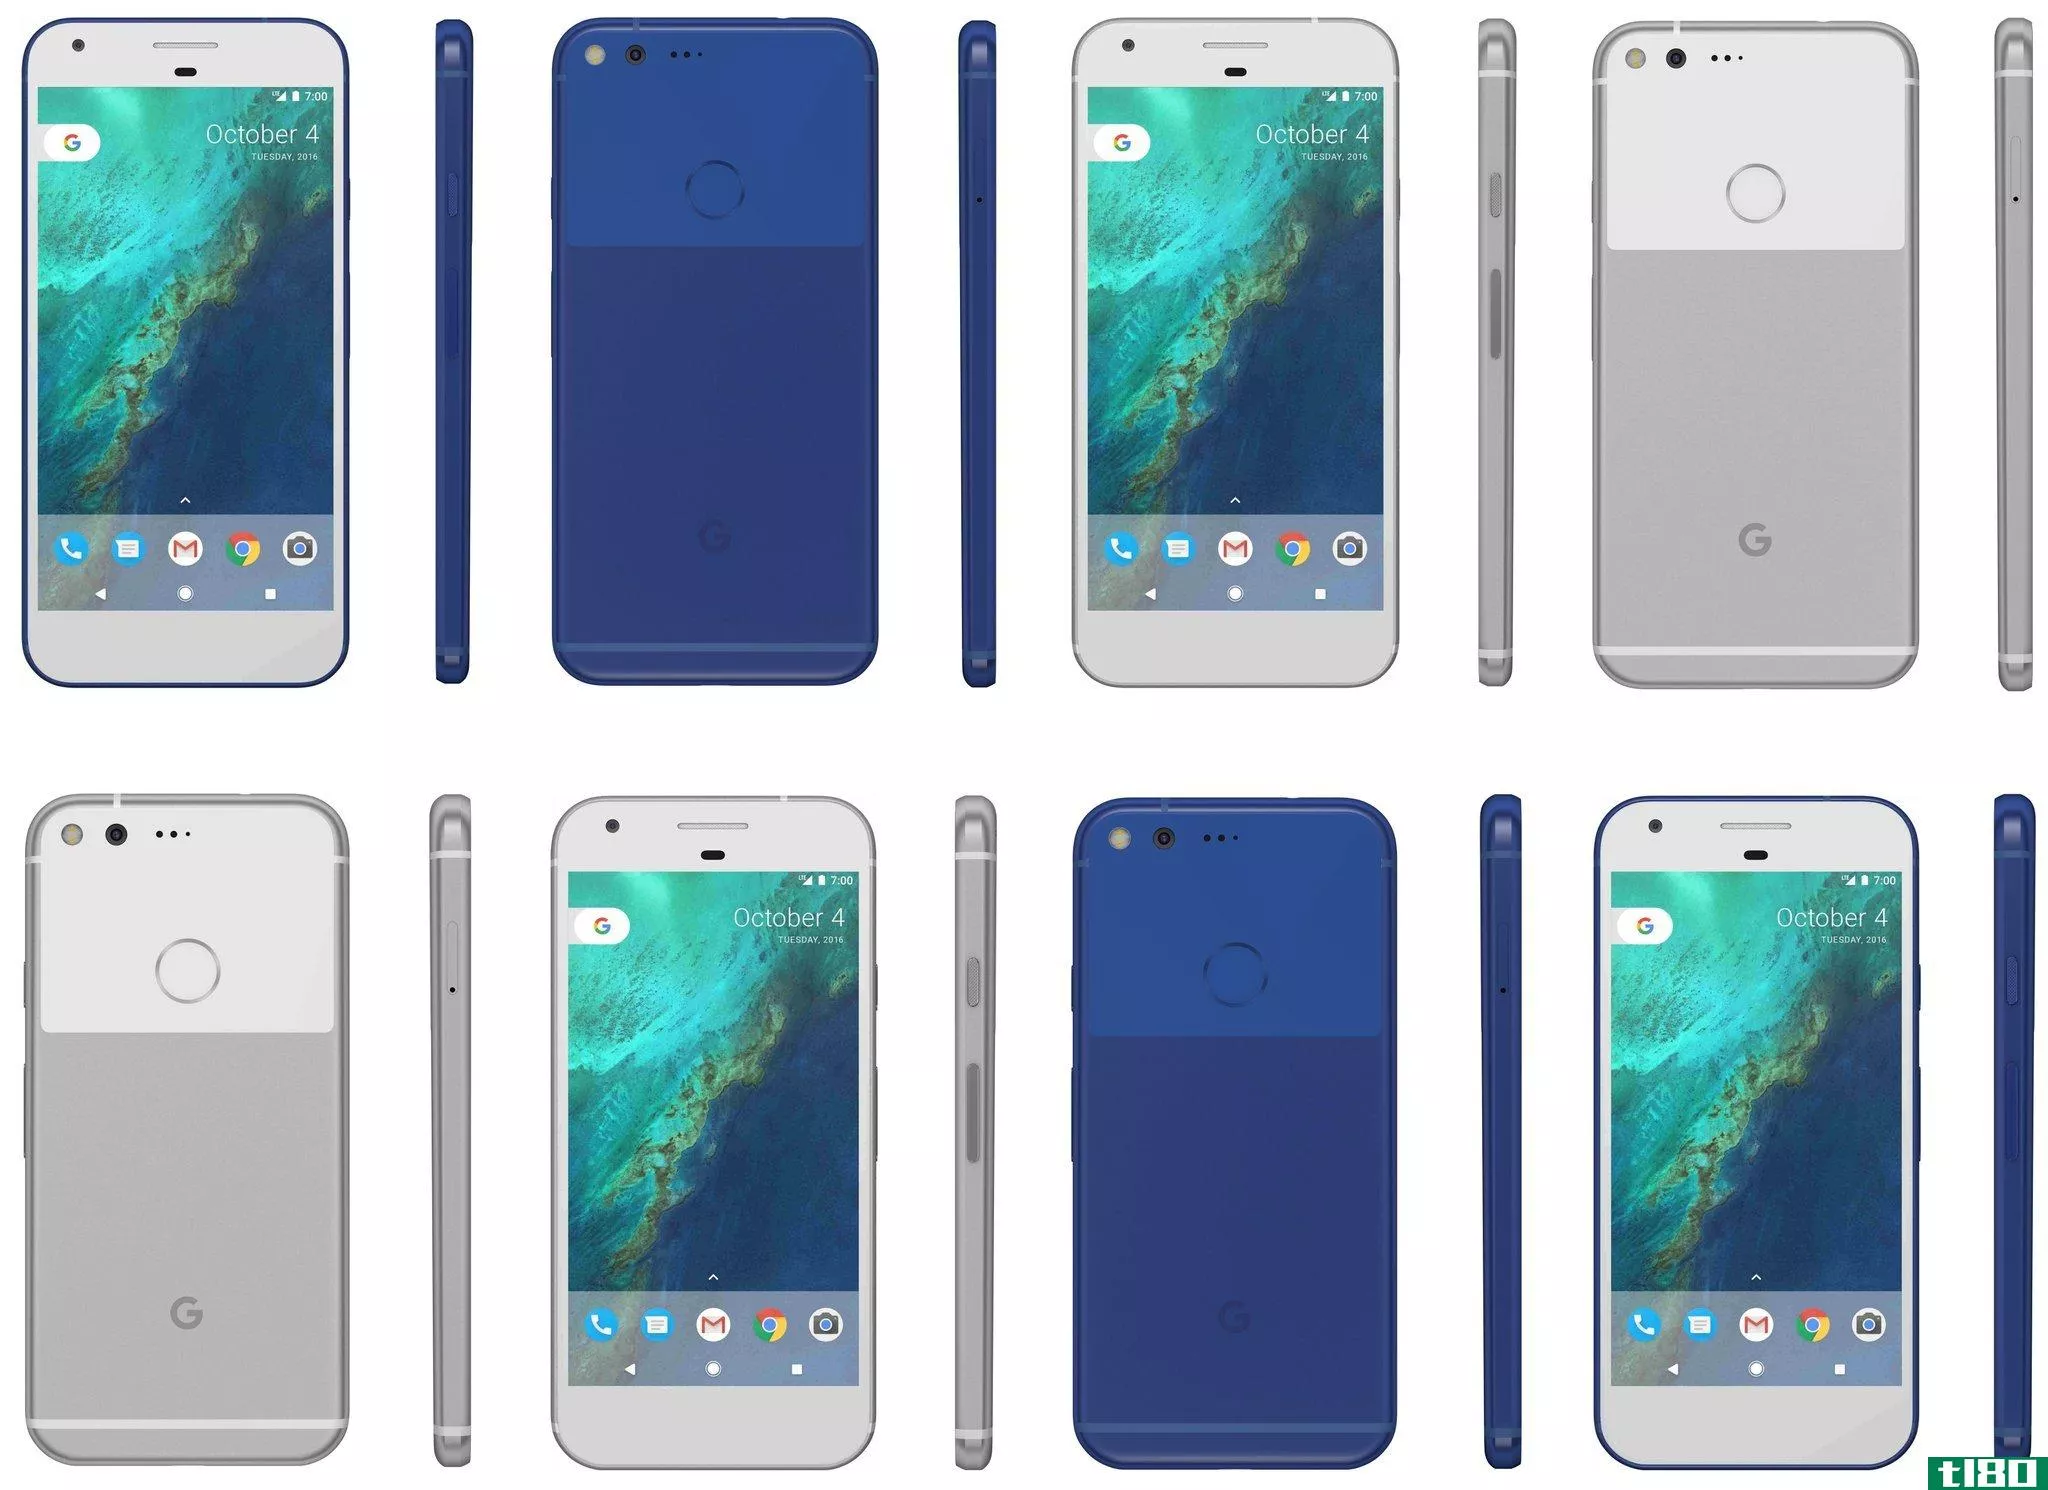 verizon是最新泄露谷歌像素手机的公司，它们的颜色是蓝色的